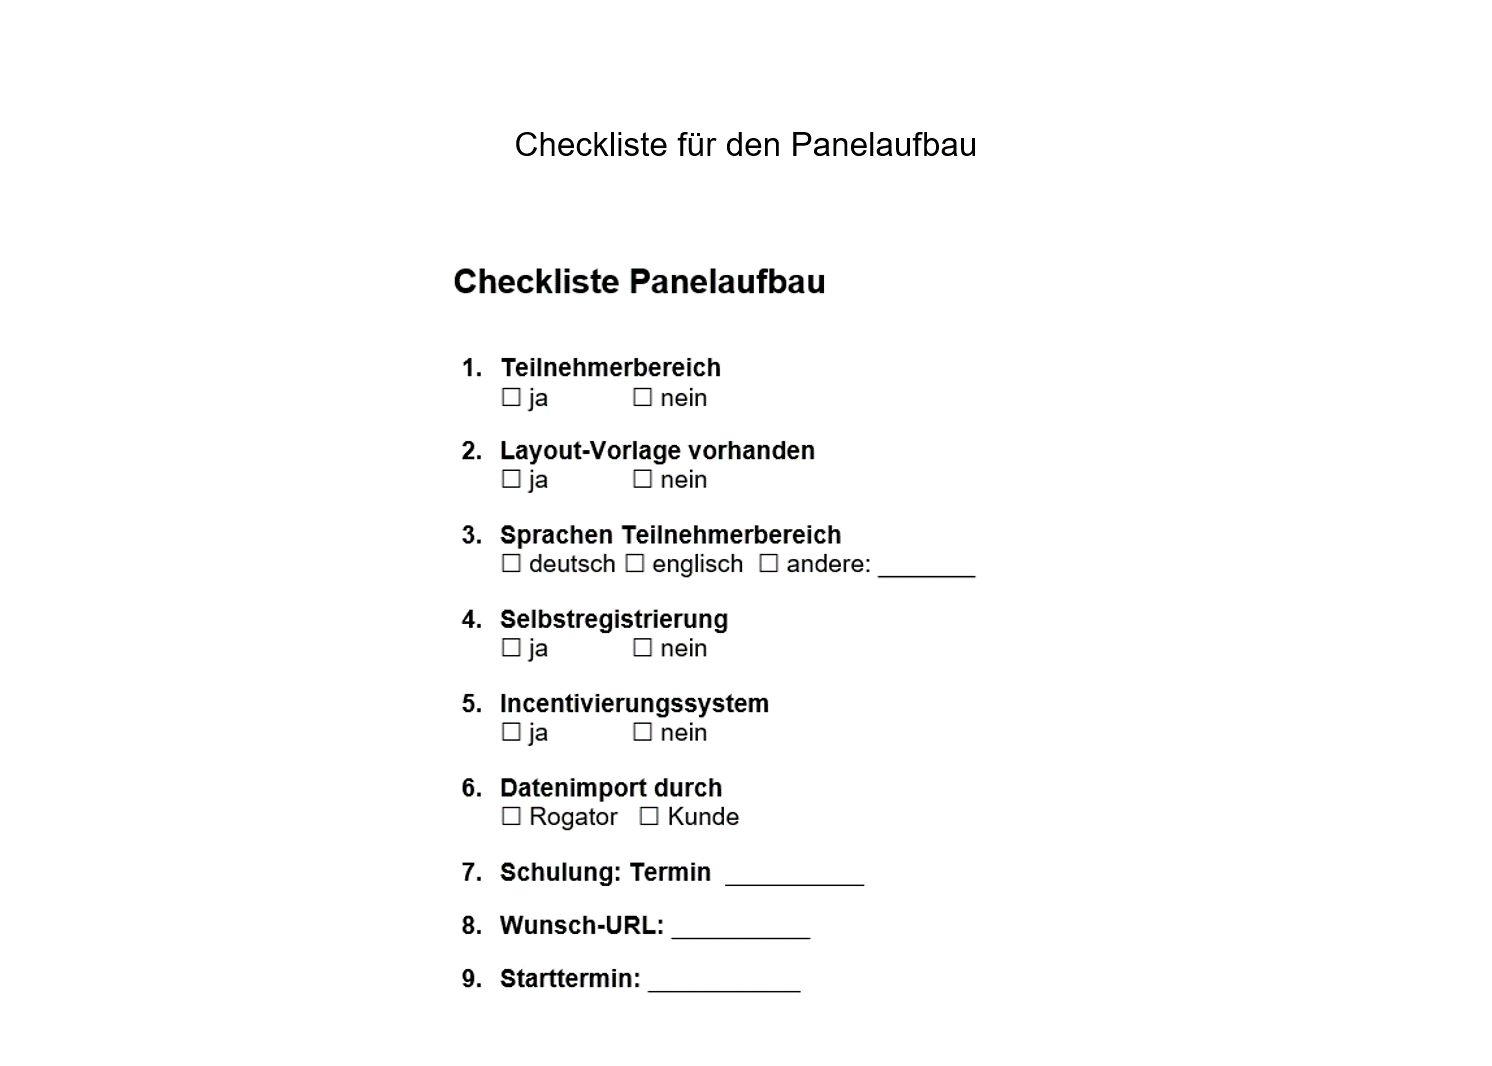 Panelaufbau Checkliste